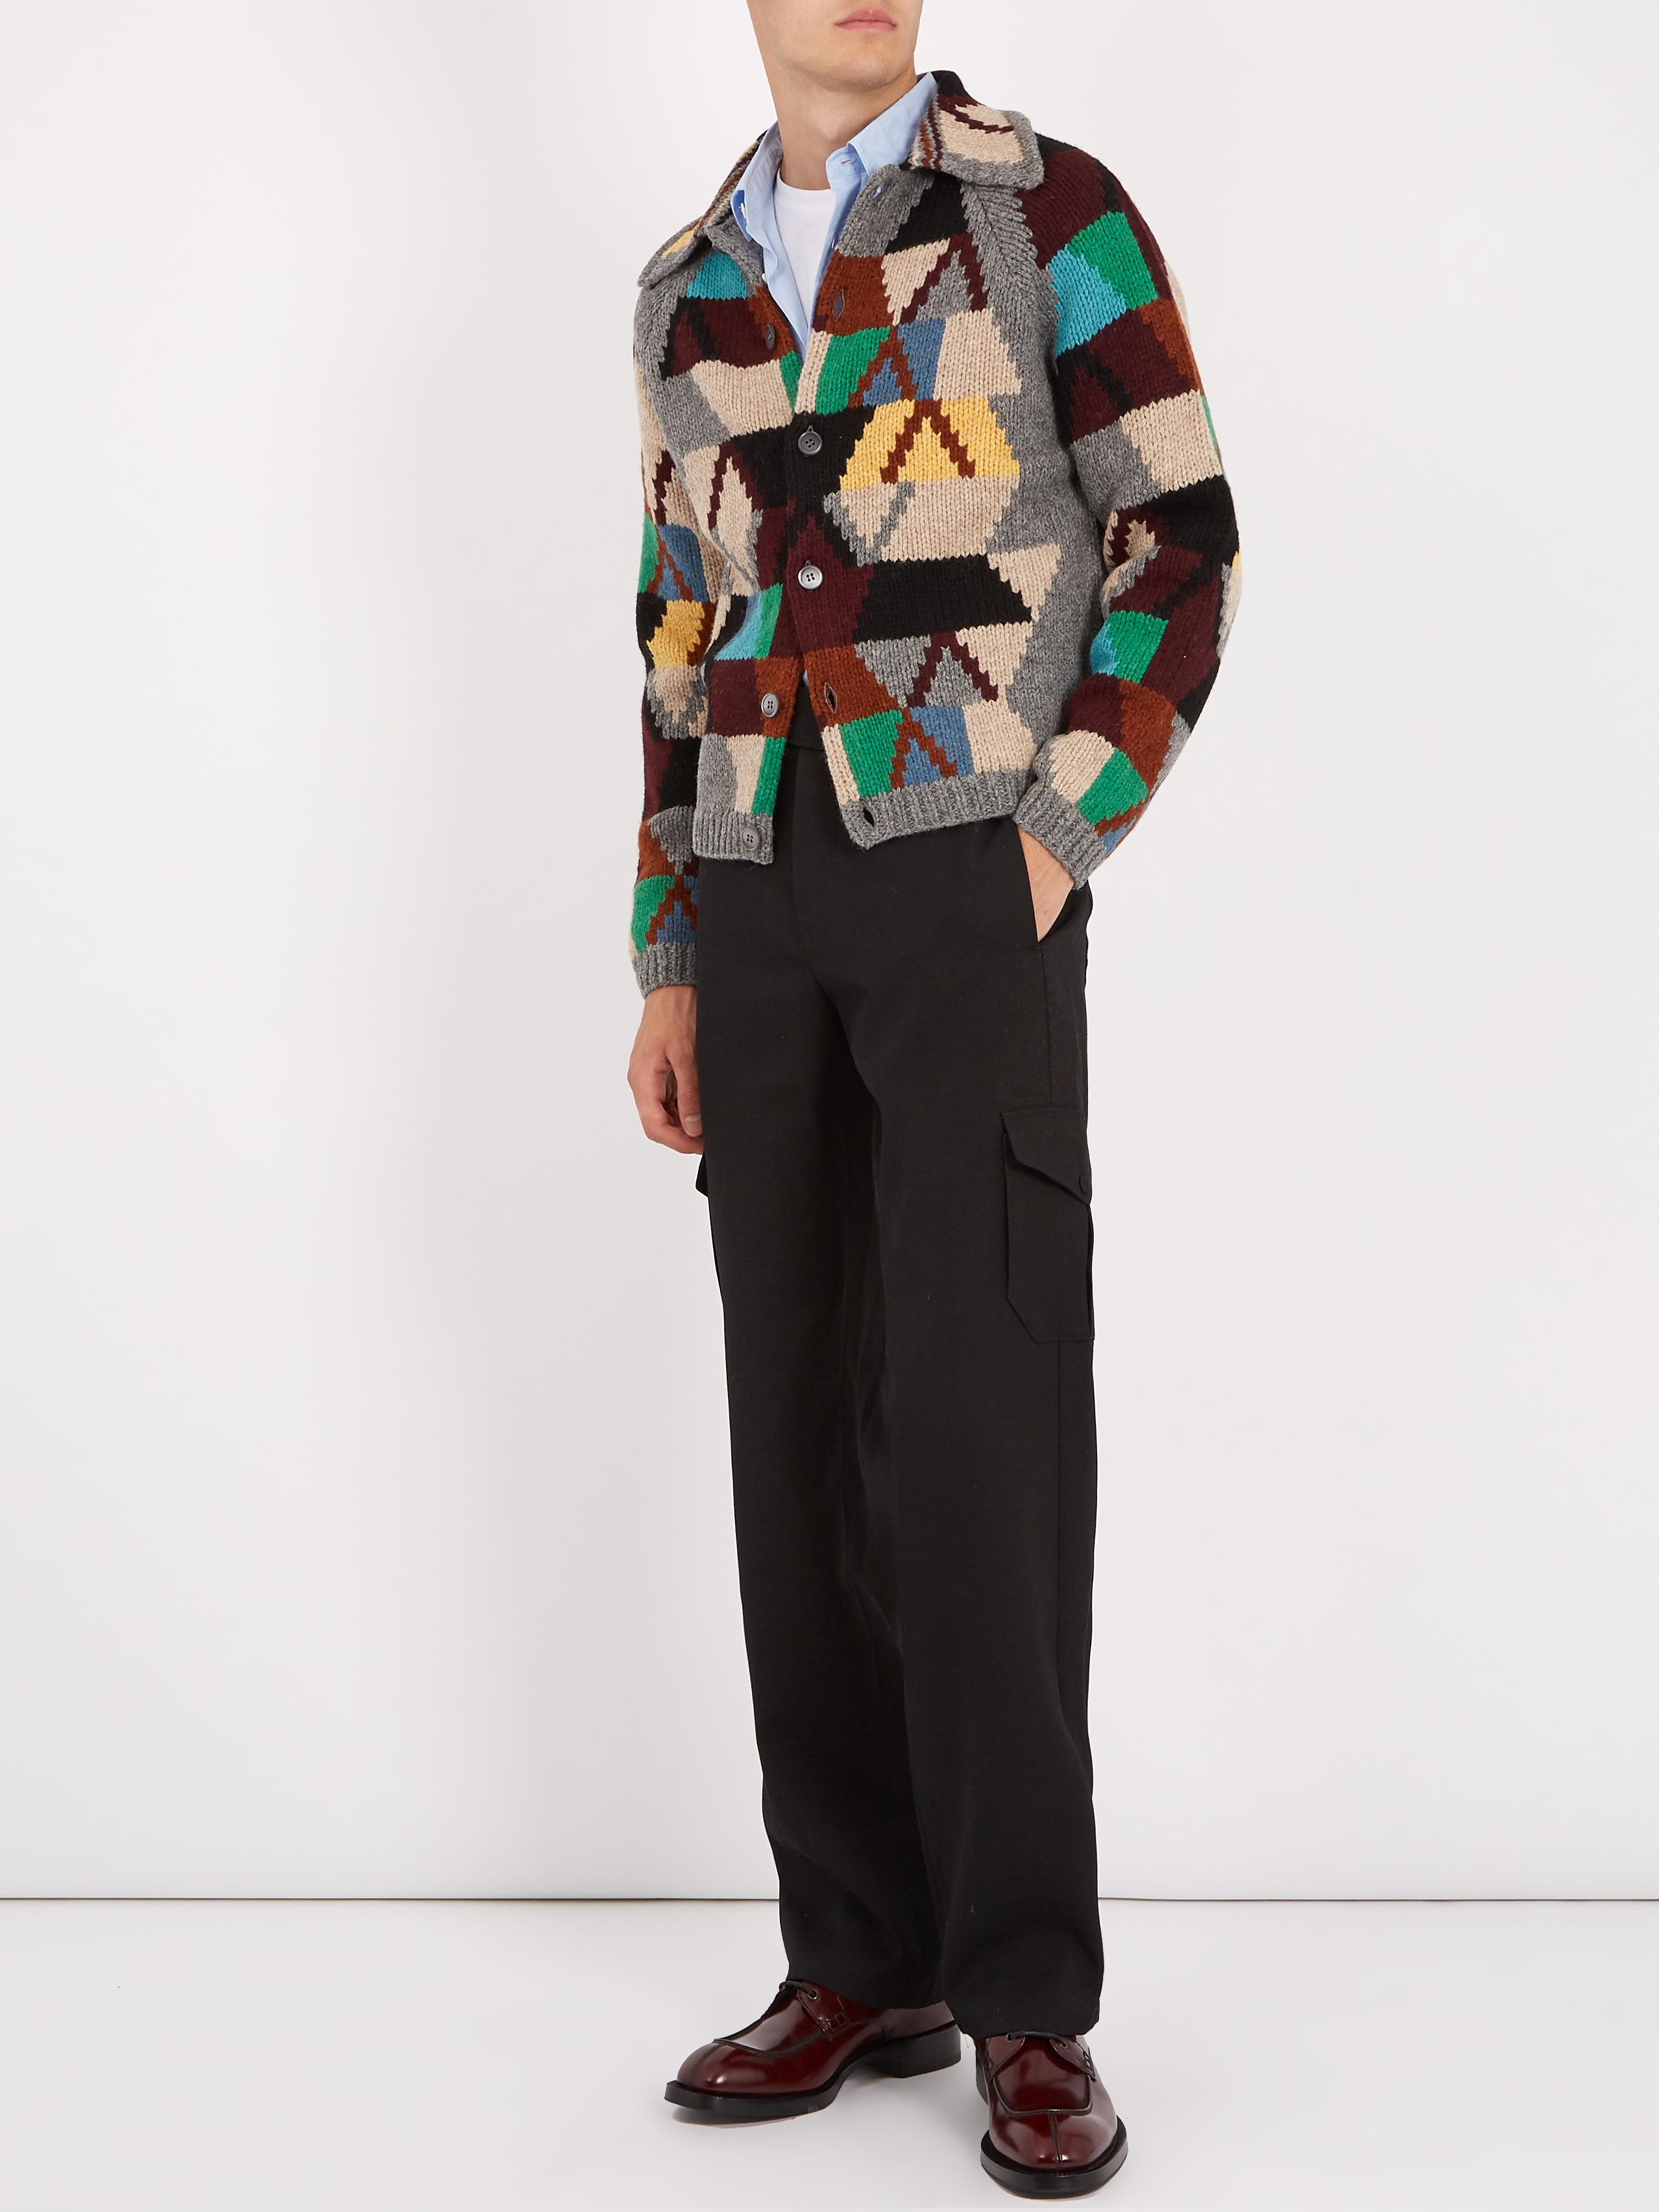 Lyst - Prada Handmade Geometric Pattern Wool Knit for Men